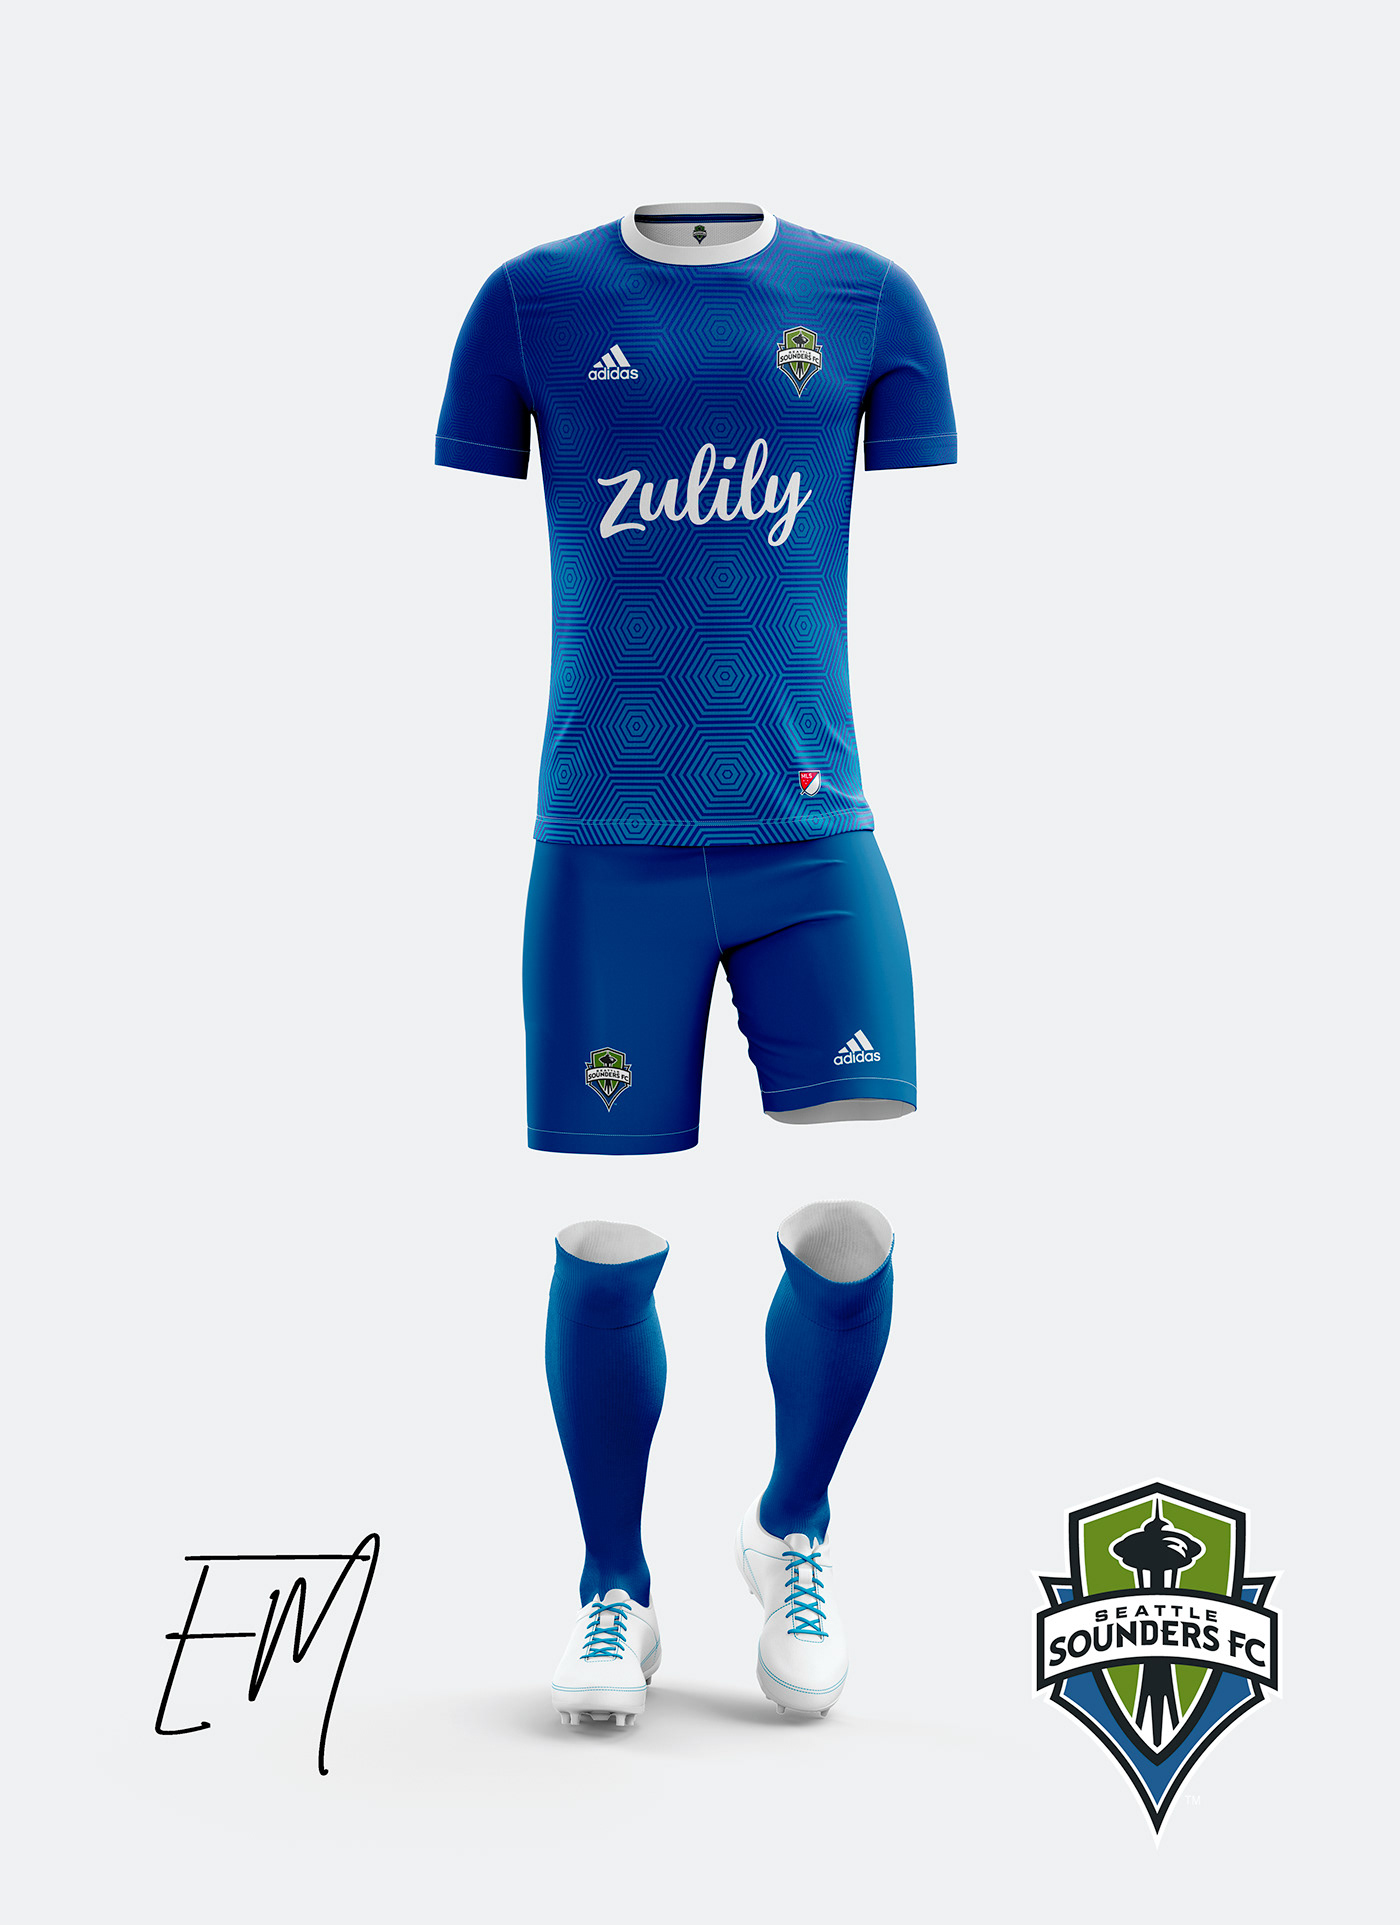 mls sounders seattle jersey concept kit soccerkit